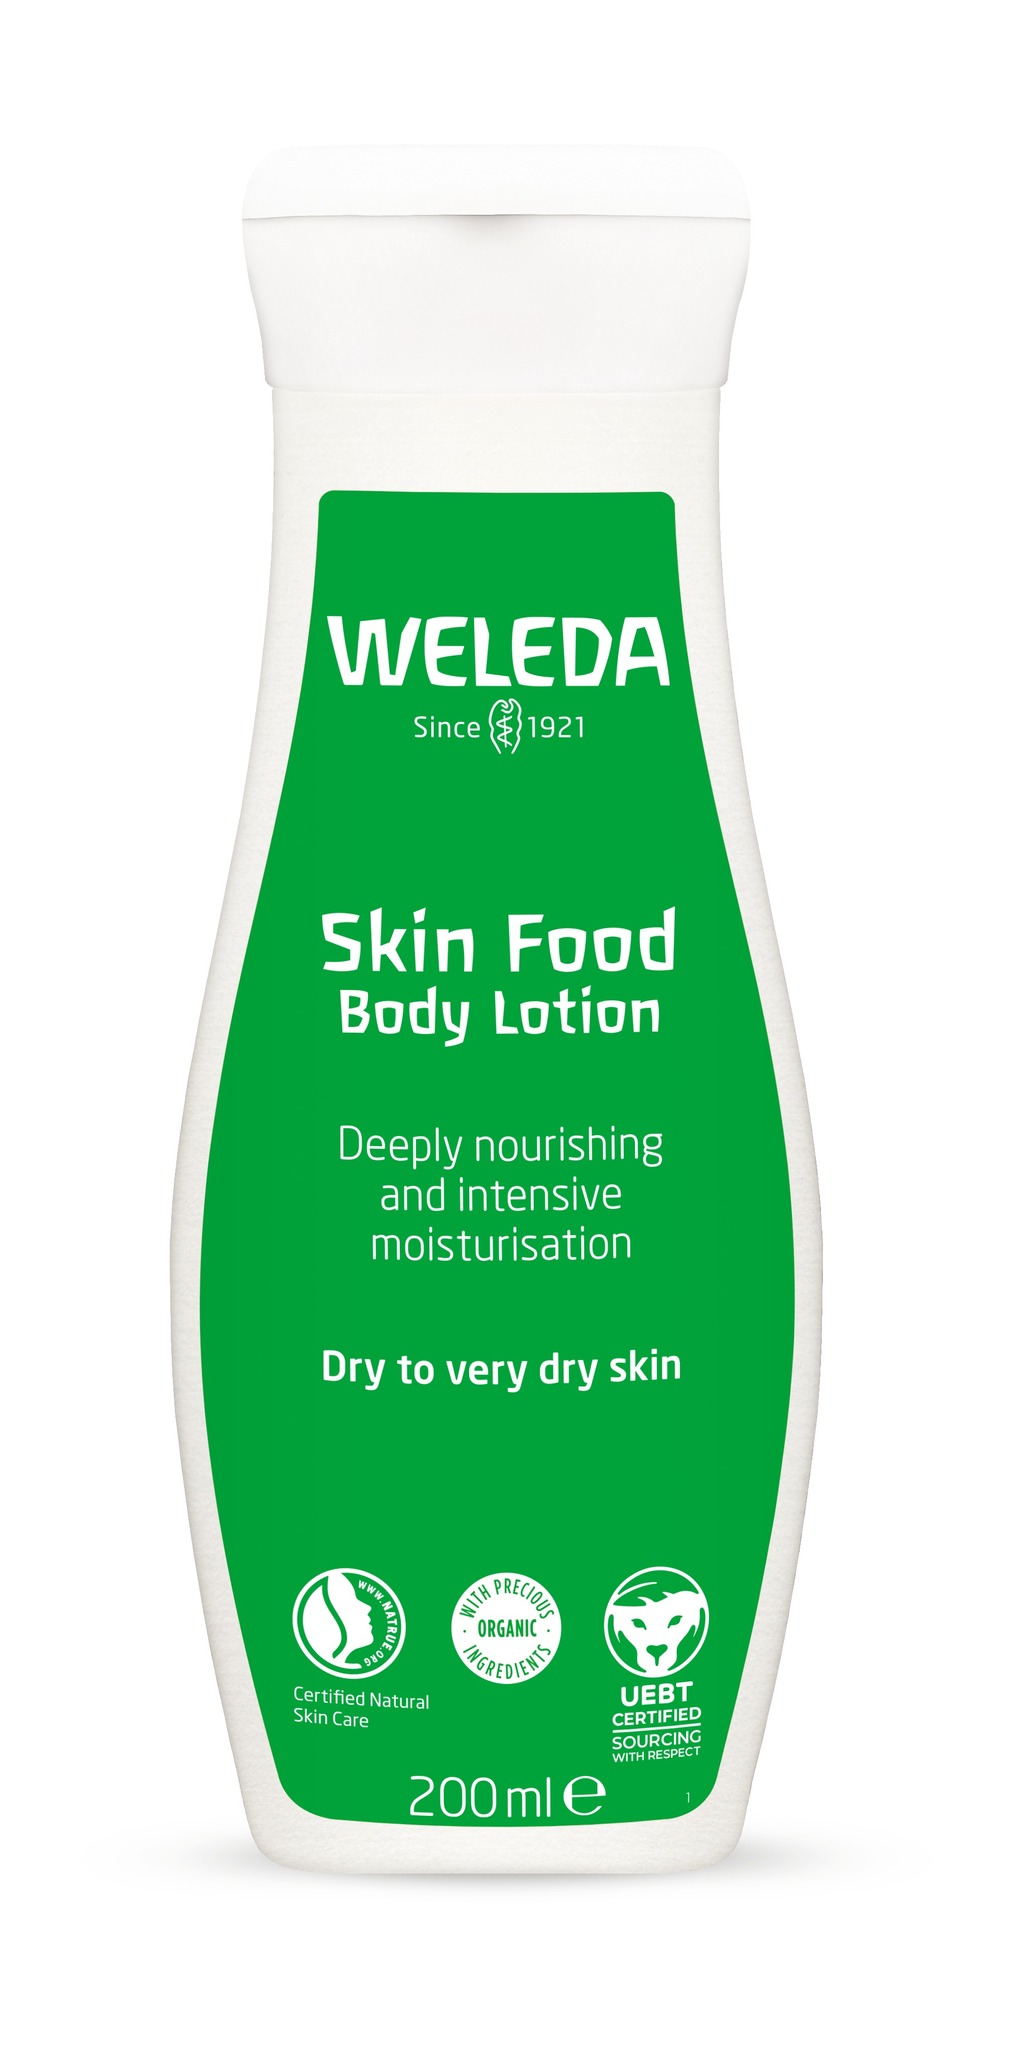 WELEDA, Skin Food Body Lotion, 200ml.